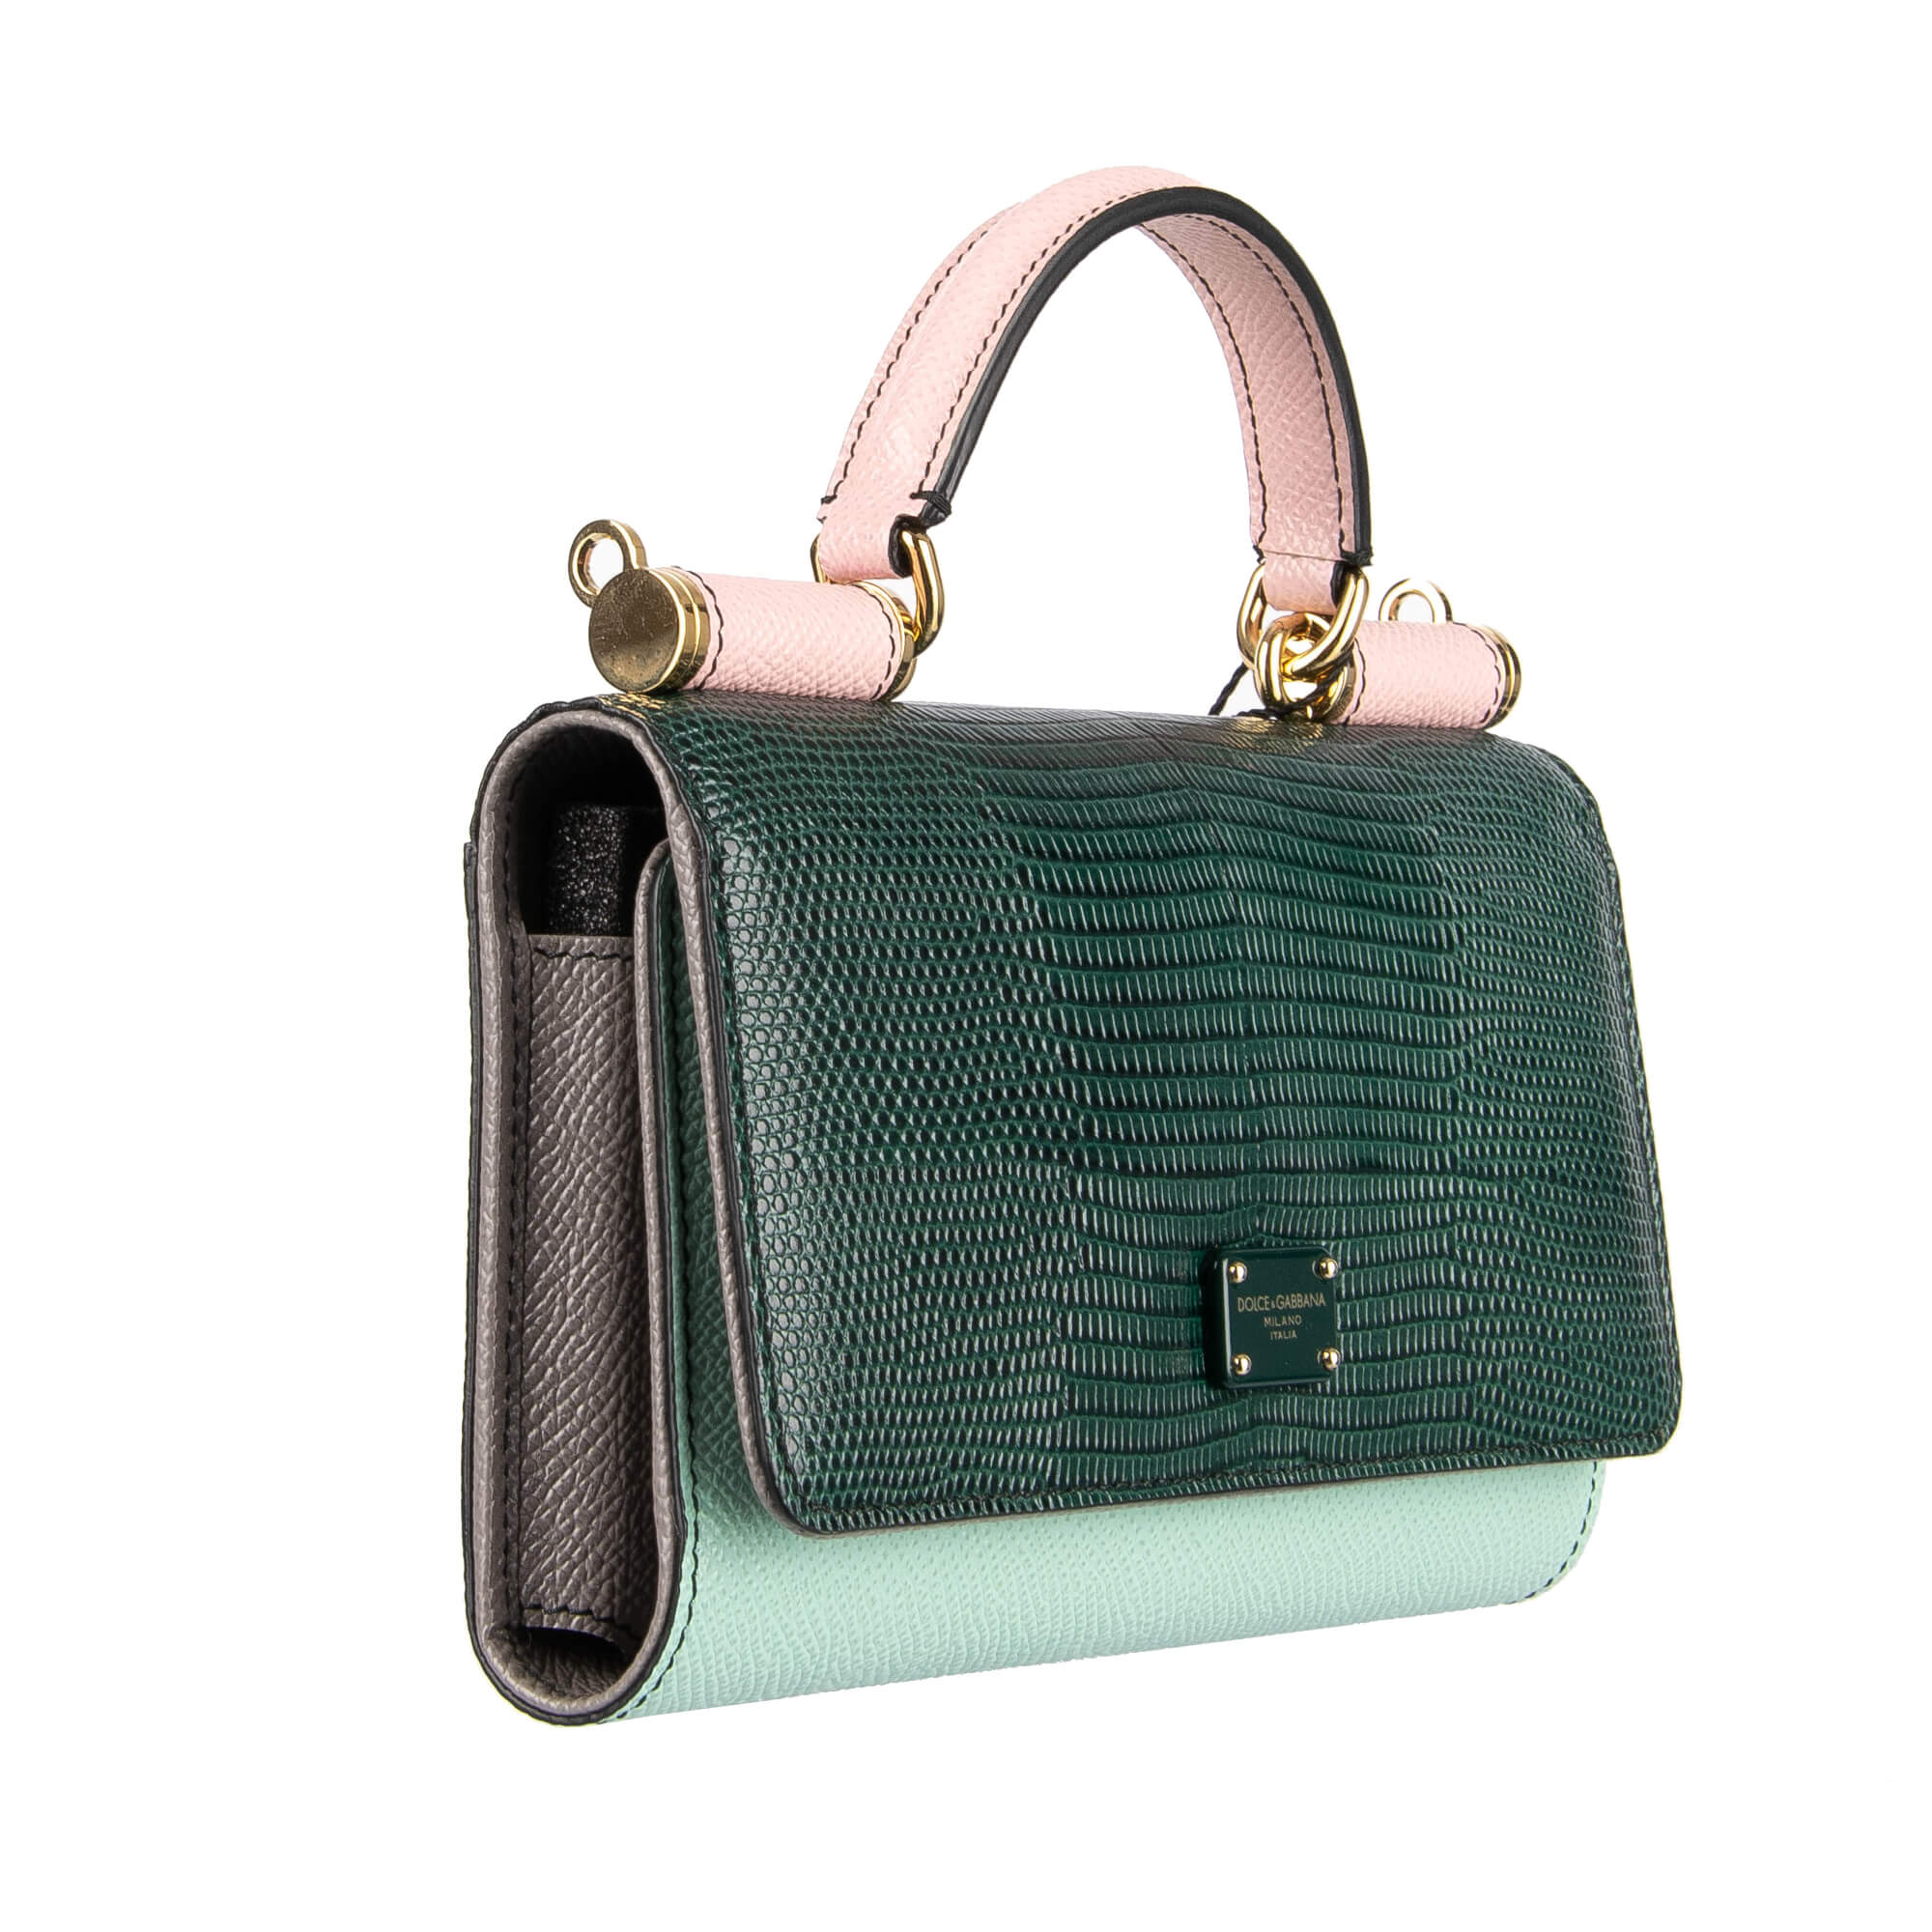 dolce and gabbana clutch handbags